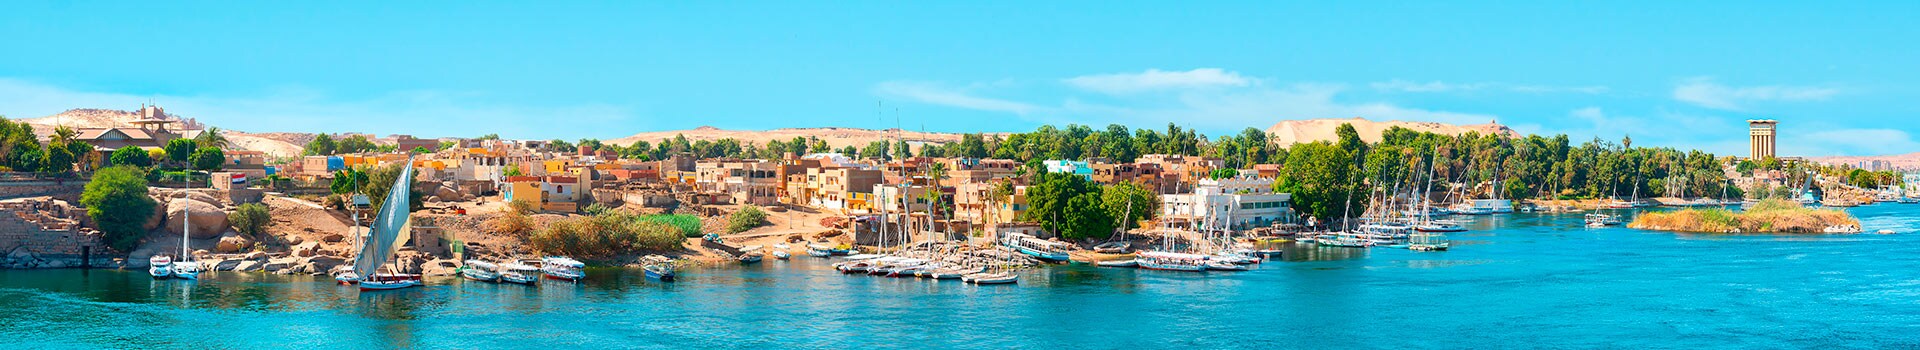 Cairo - Aswan